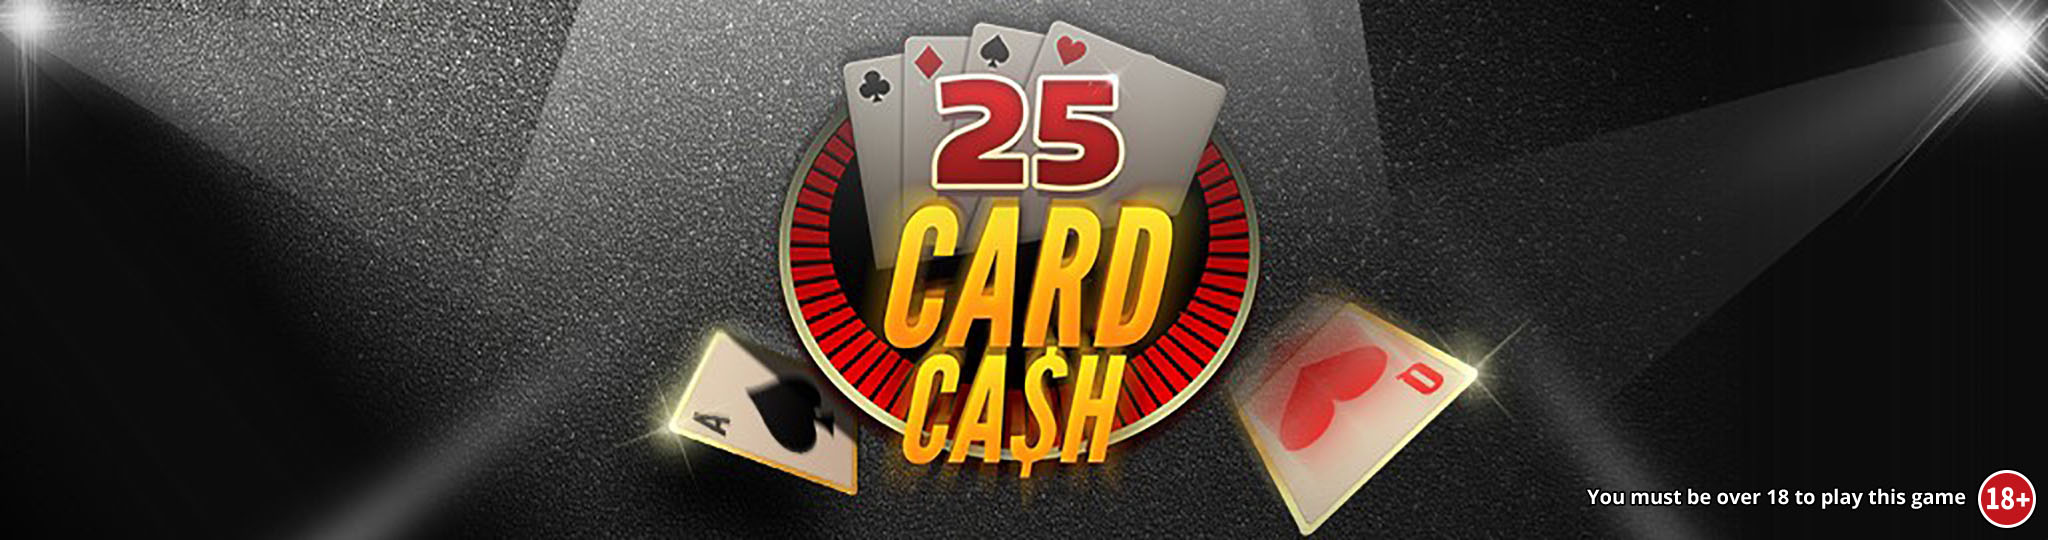 25 Card Cash Review